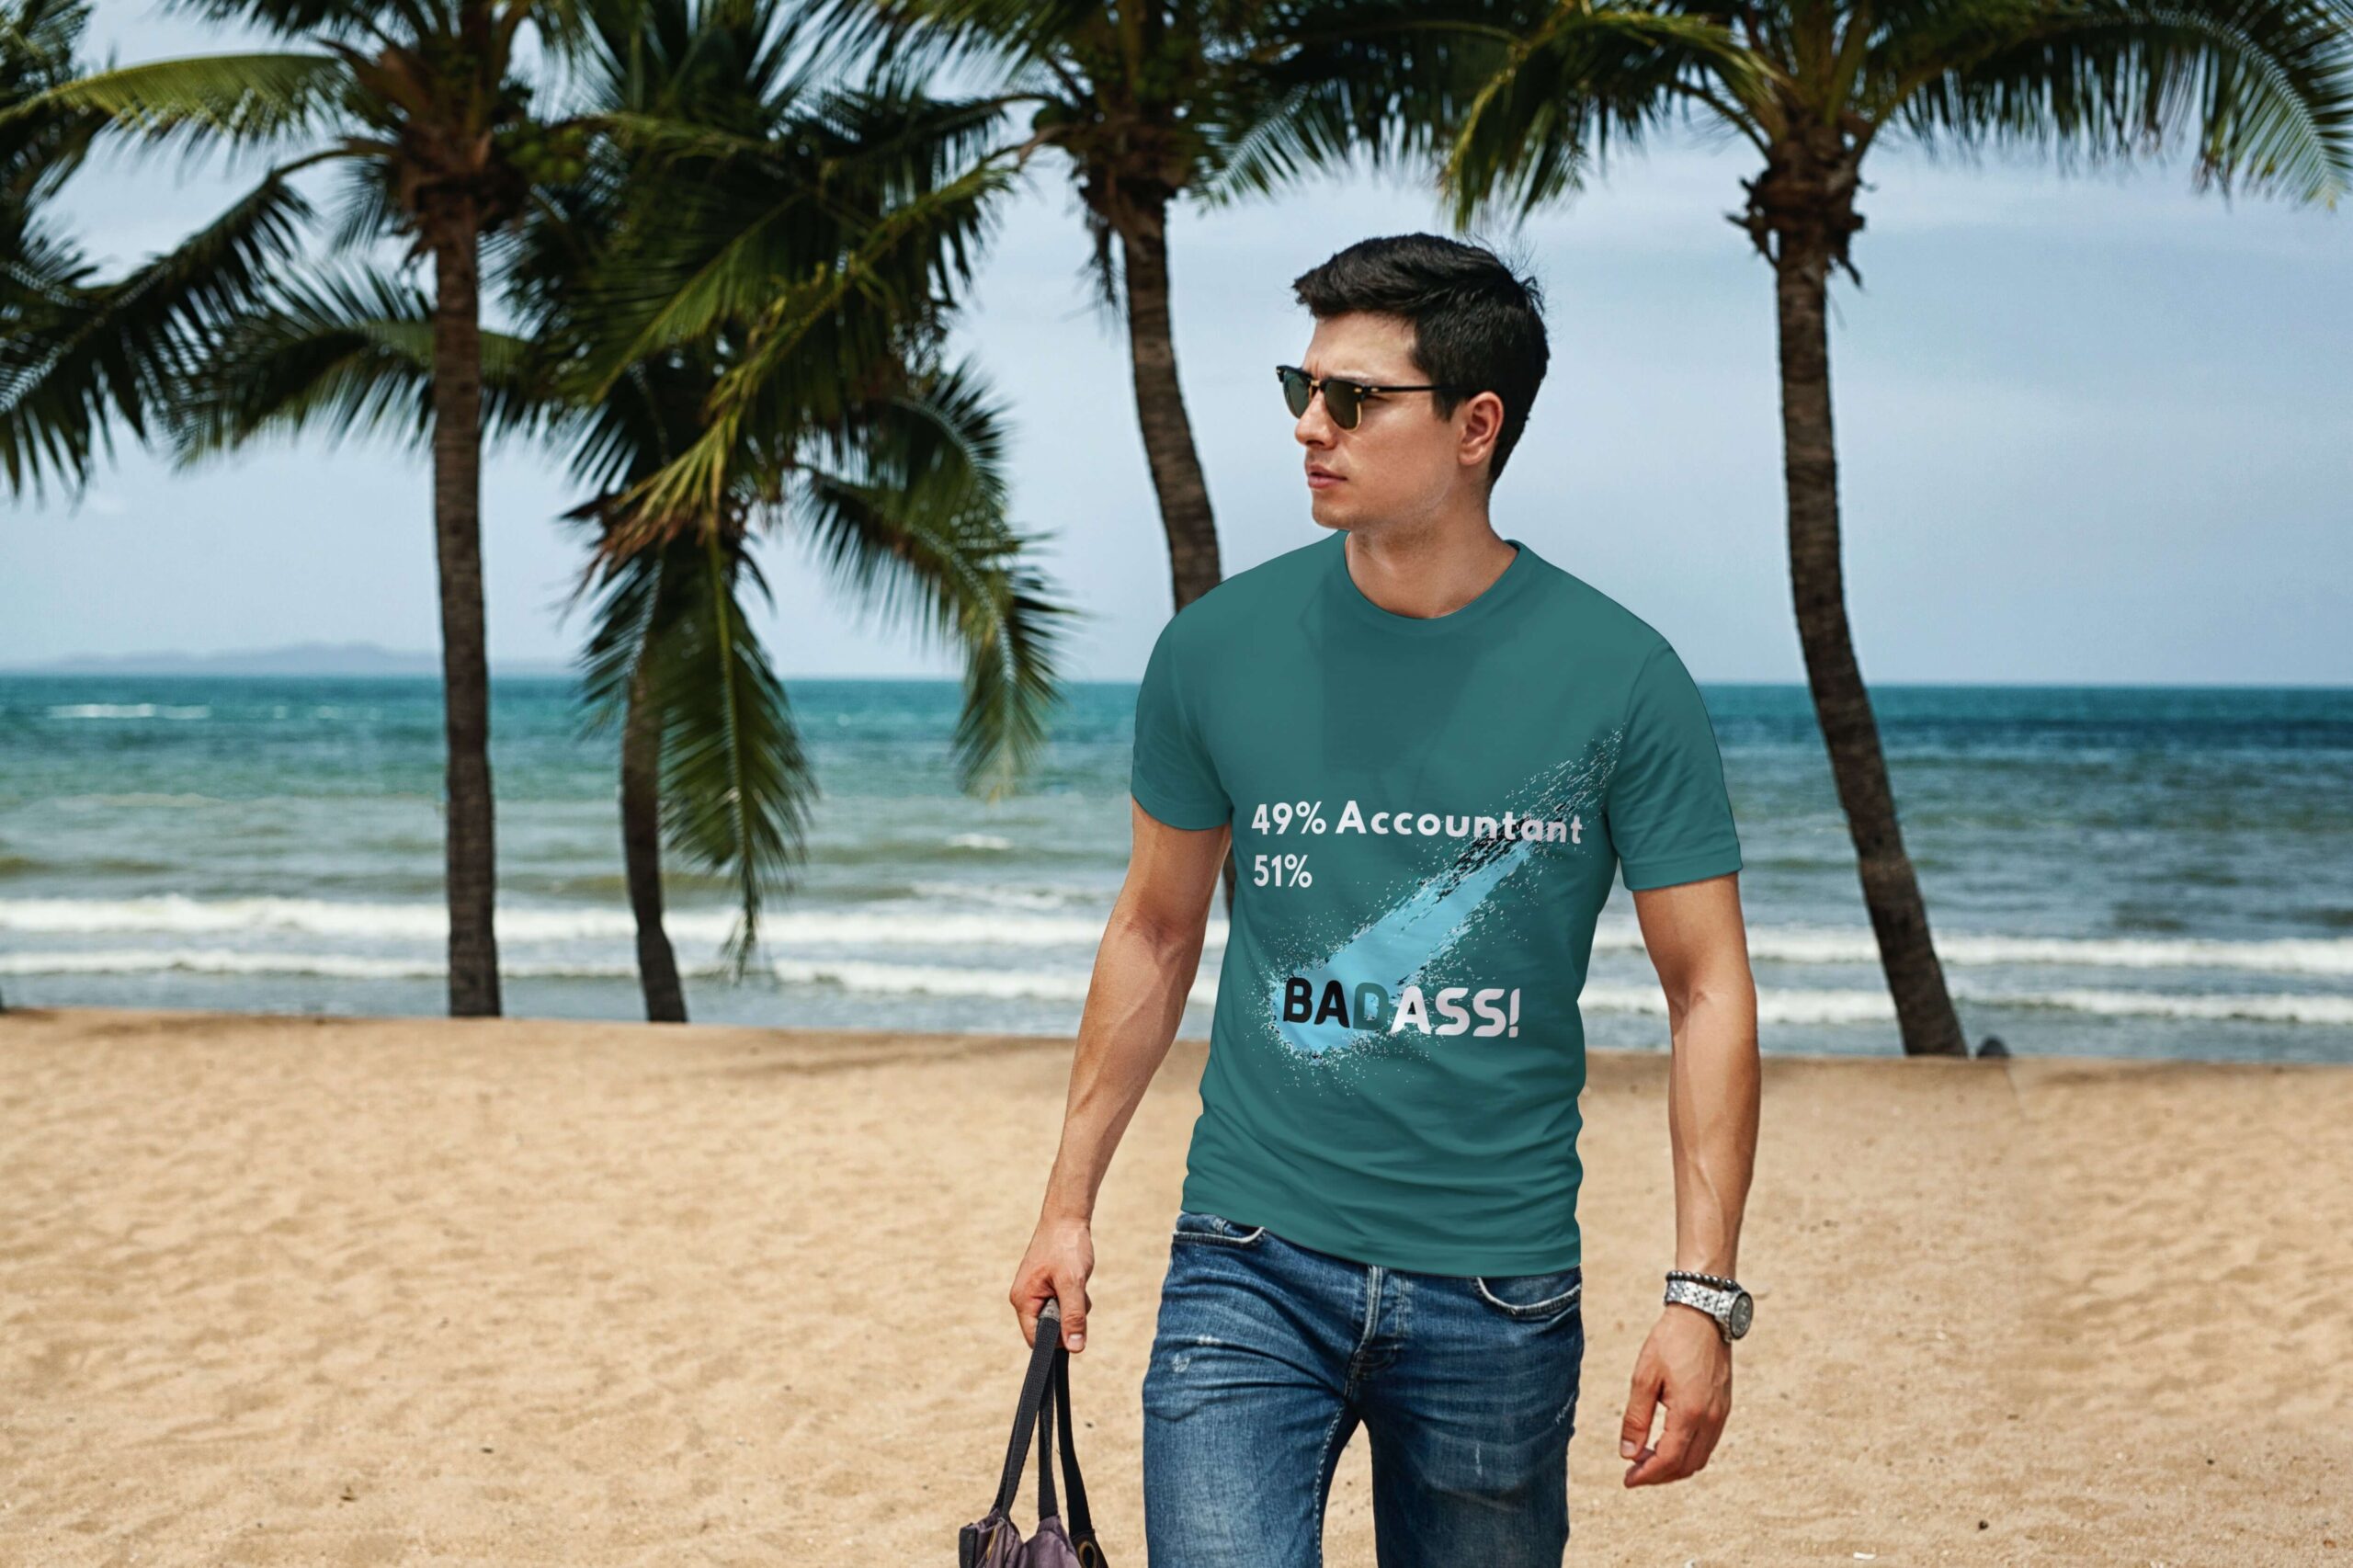 Man walking on the beach in an accountancy t-shirt